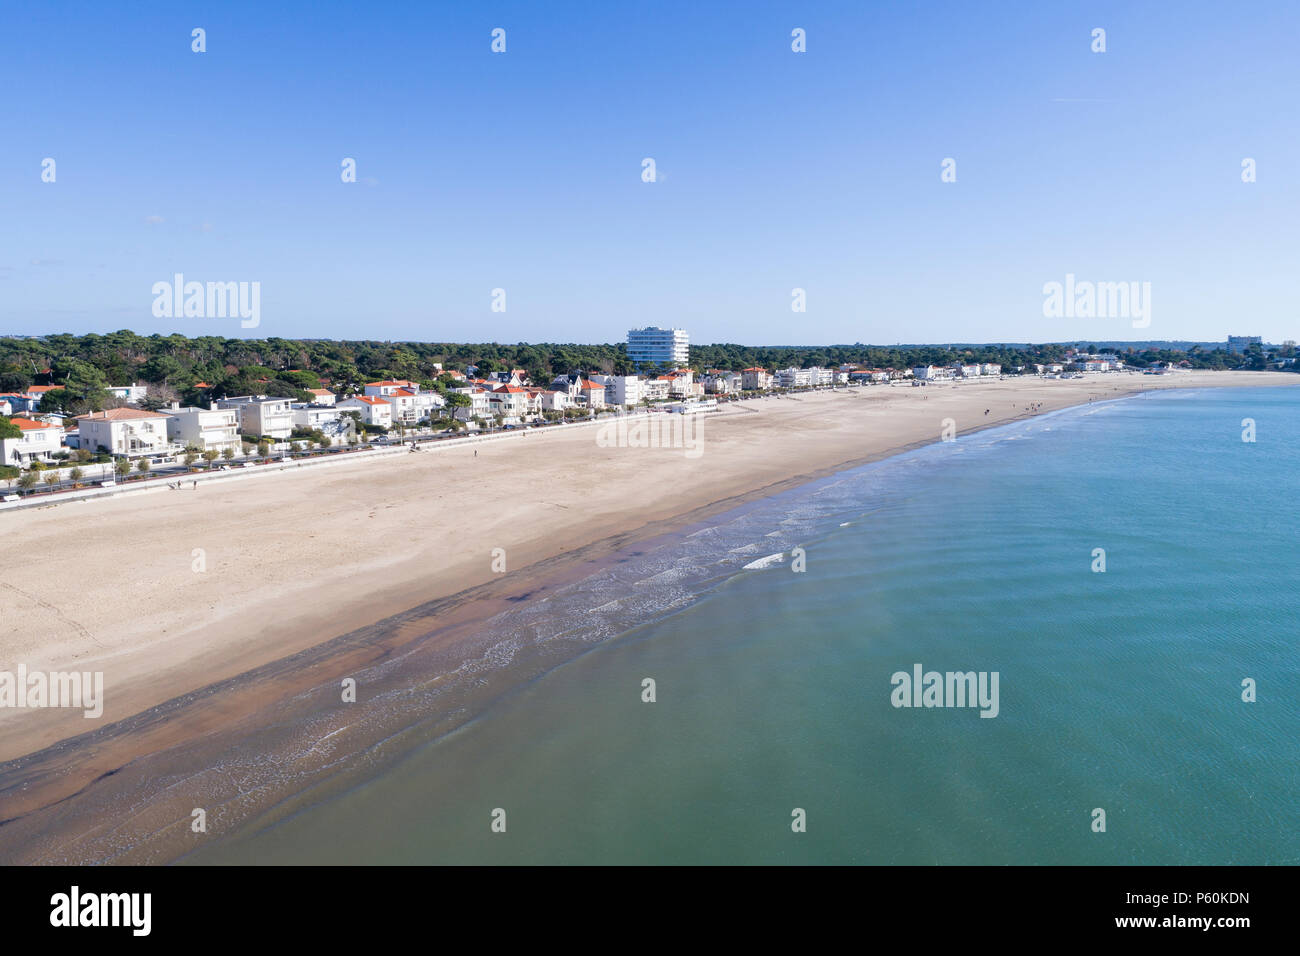 Poitou charentes beach hi-res stock photography and images - Alamy